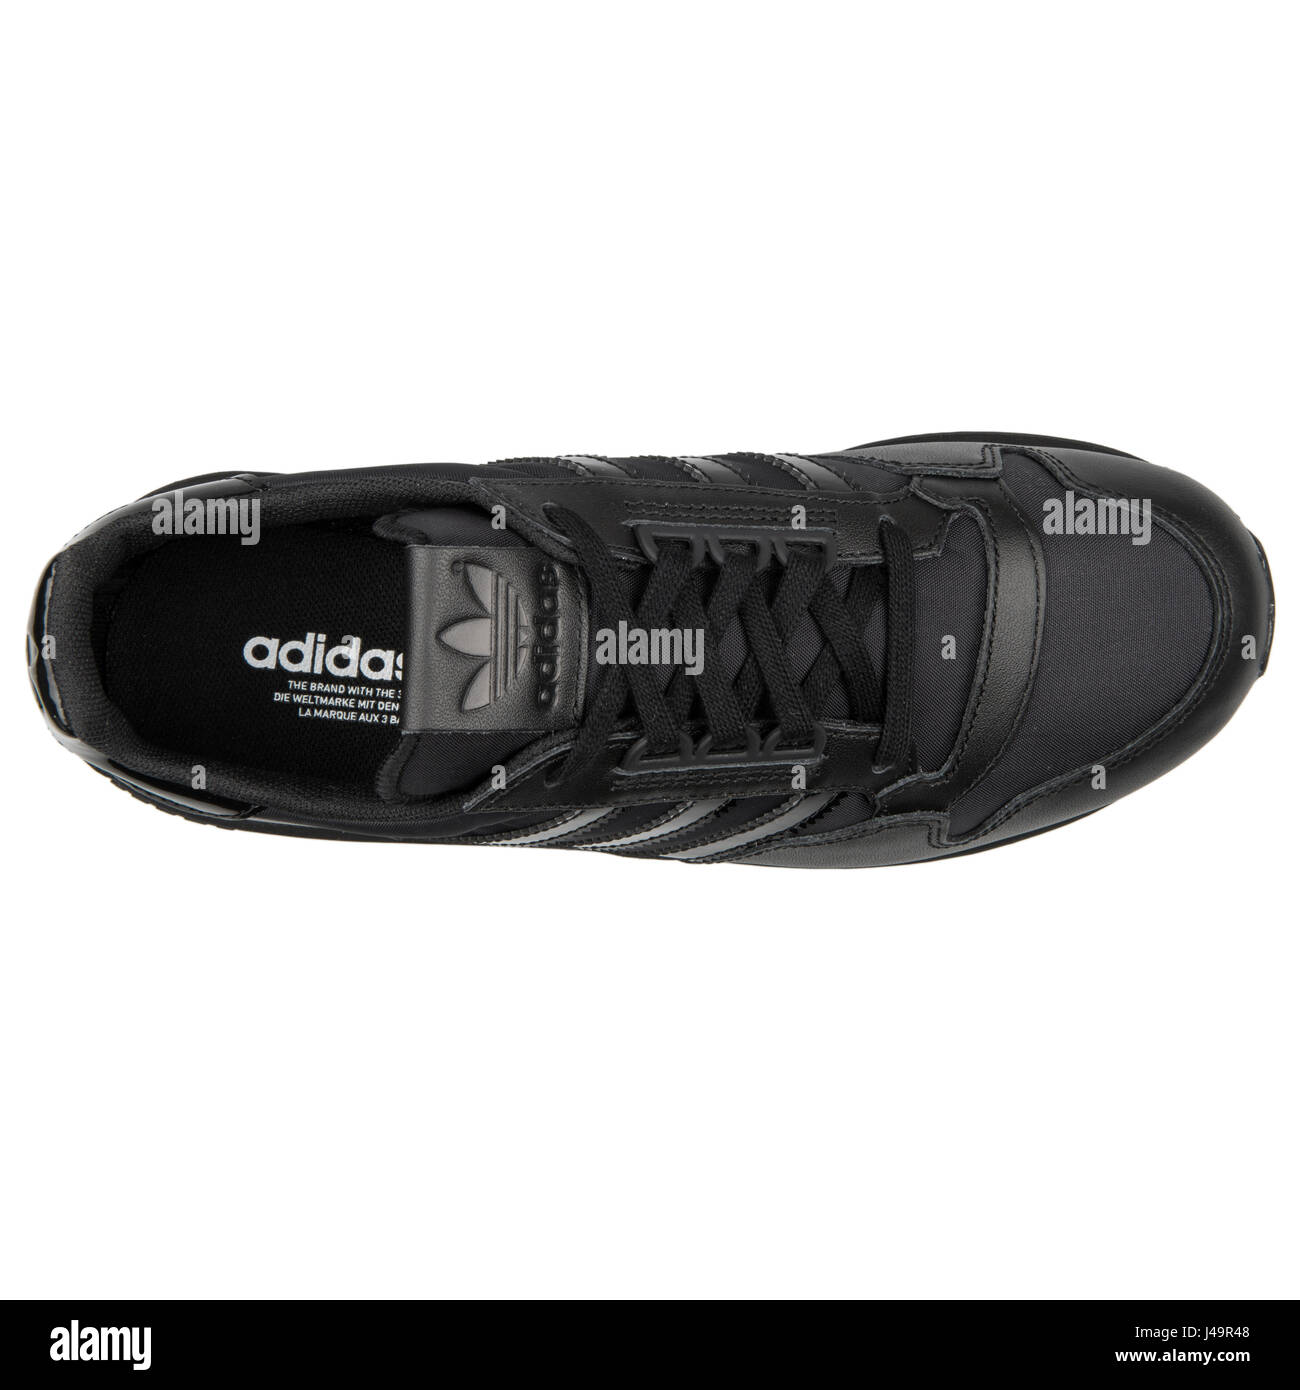 Adidas ZX 500 OG Negro - B25601 Fotografía de stock - Alamy